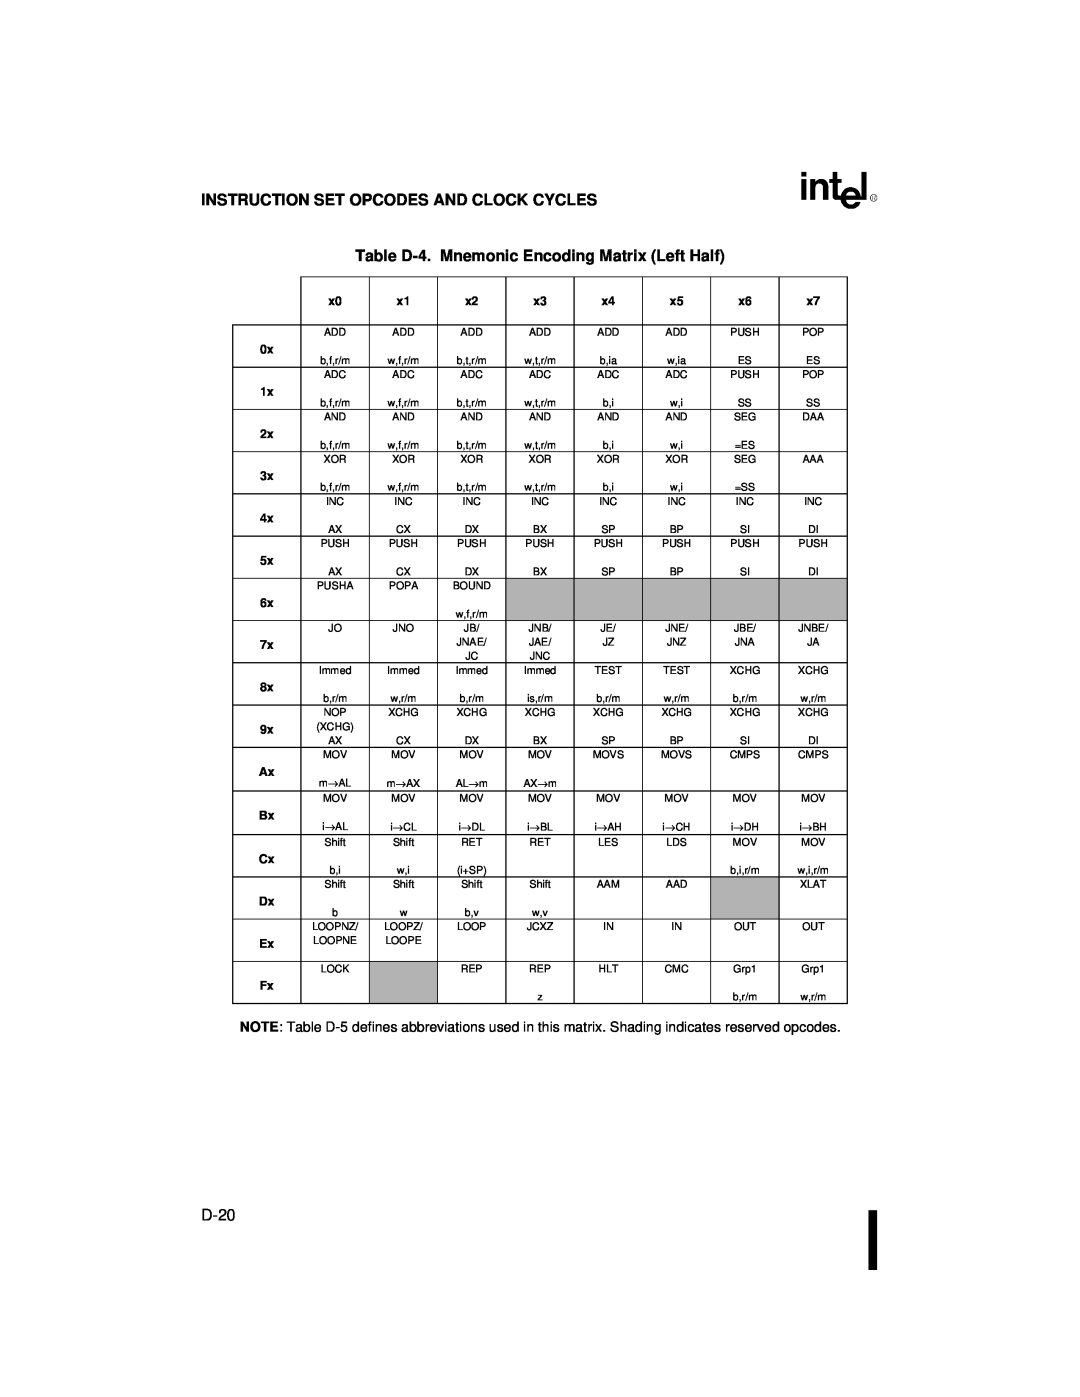 Intel 80C186XL, 80C188XL user manual Instruction Set Opcodes And Clock Cycles, Table D-4.Mnemonic Encoding Matrix Left Half 